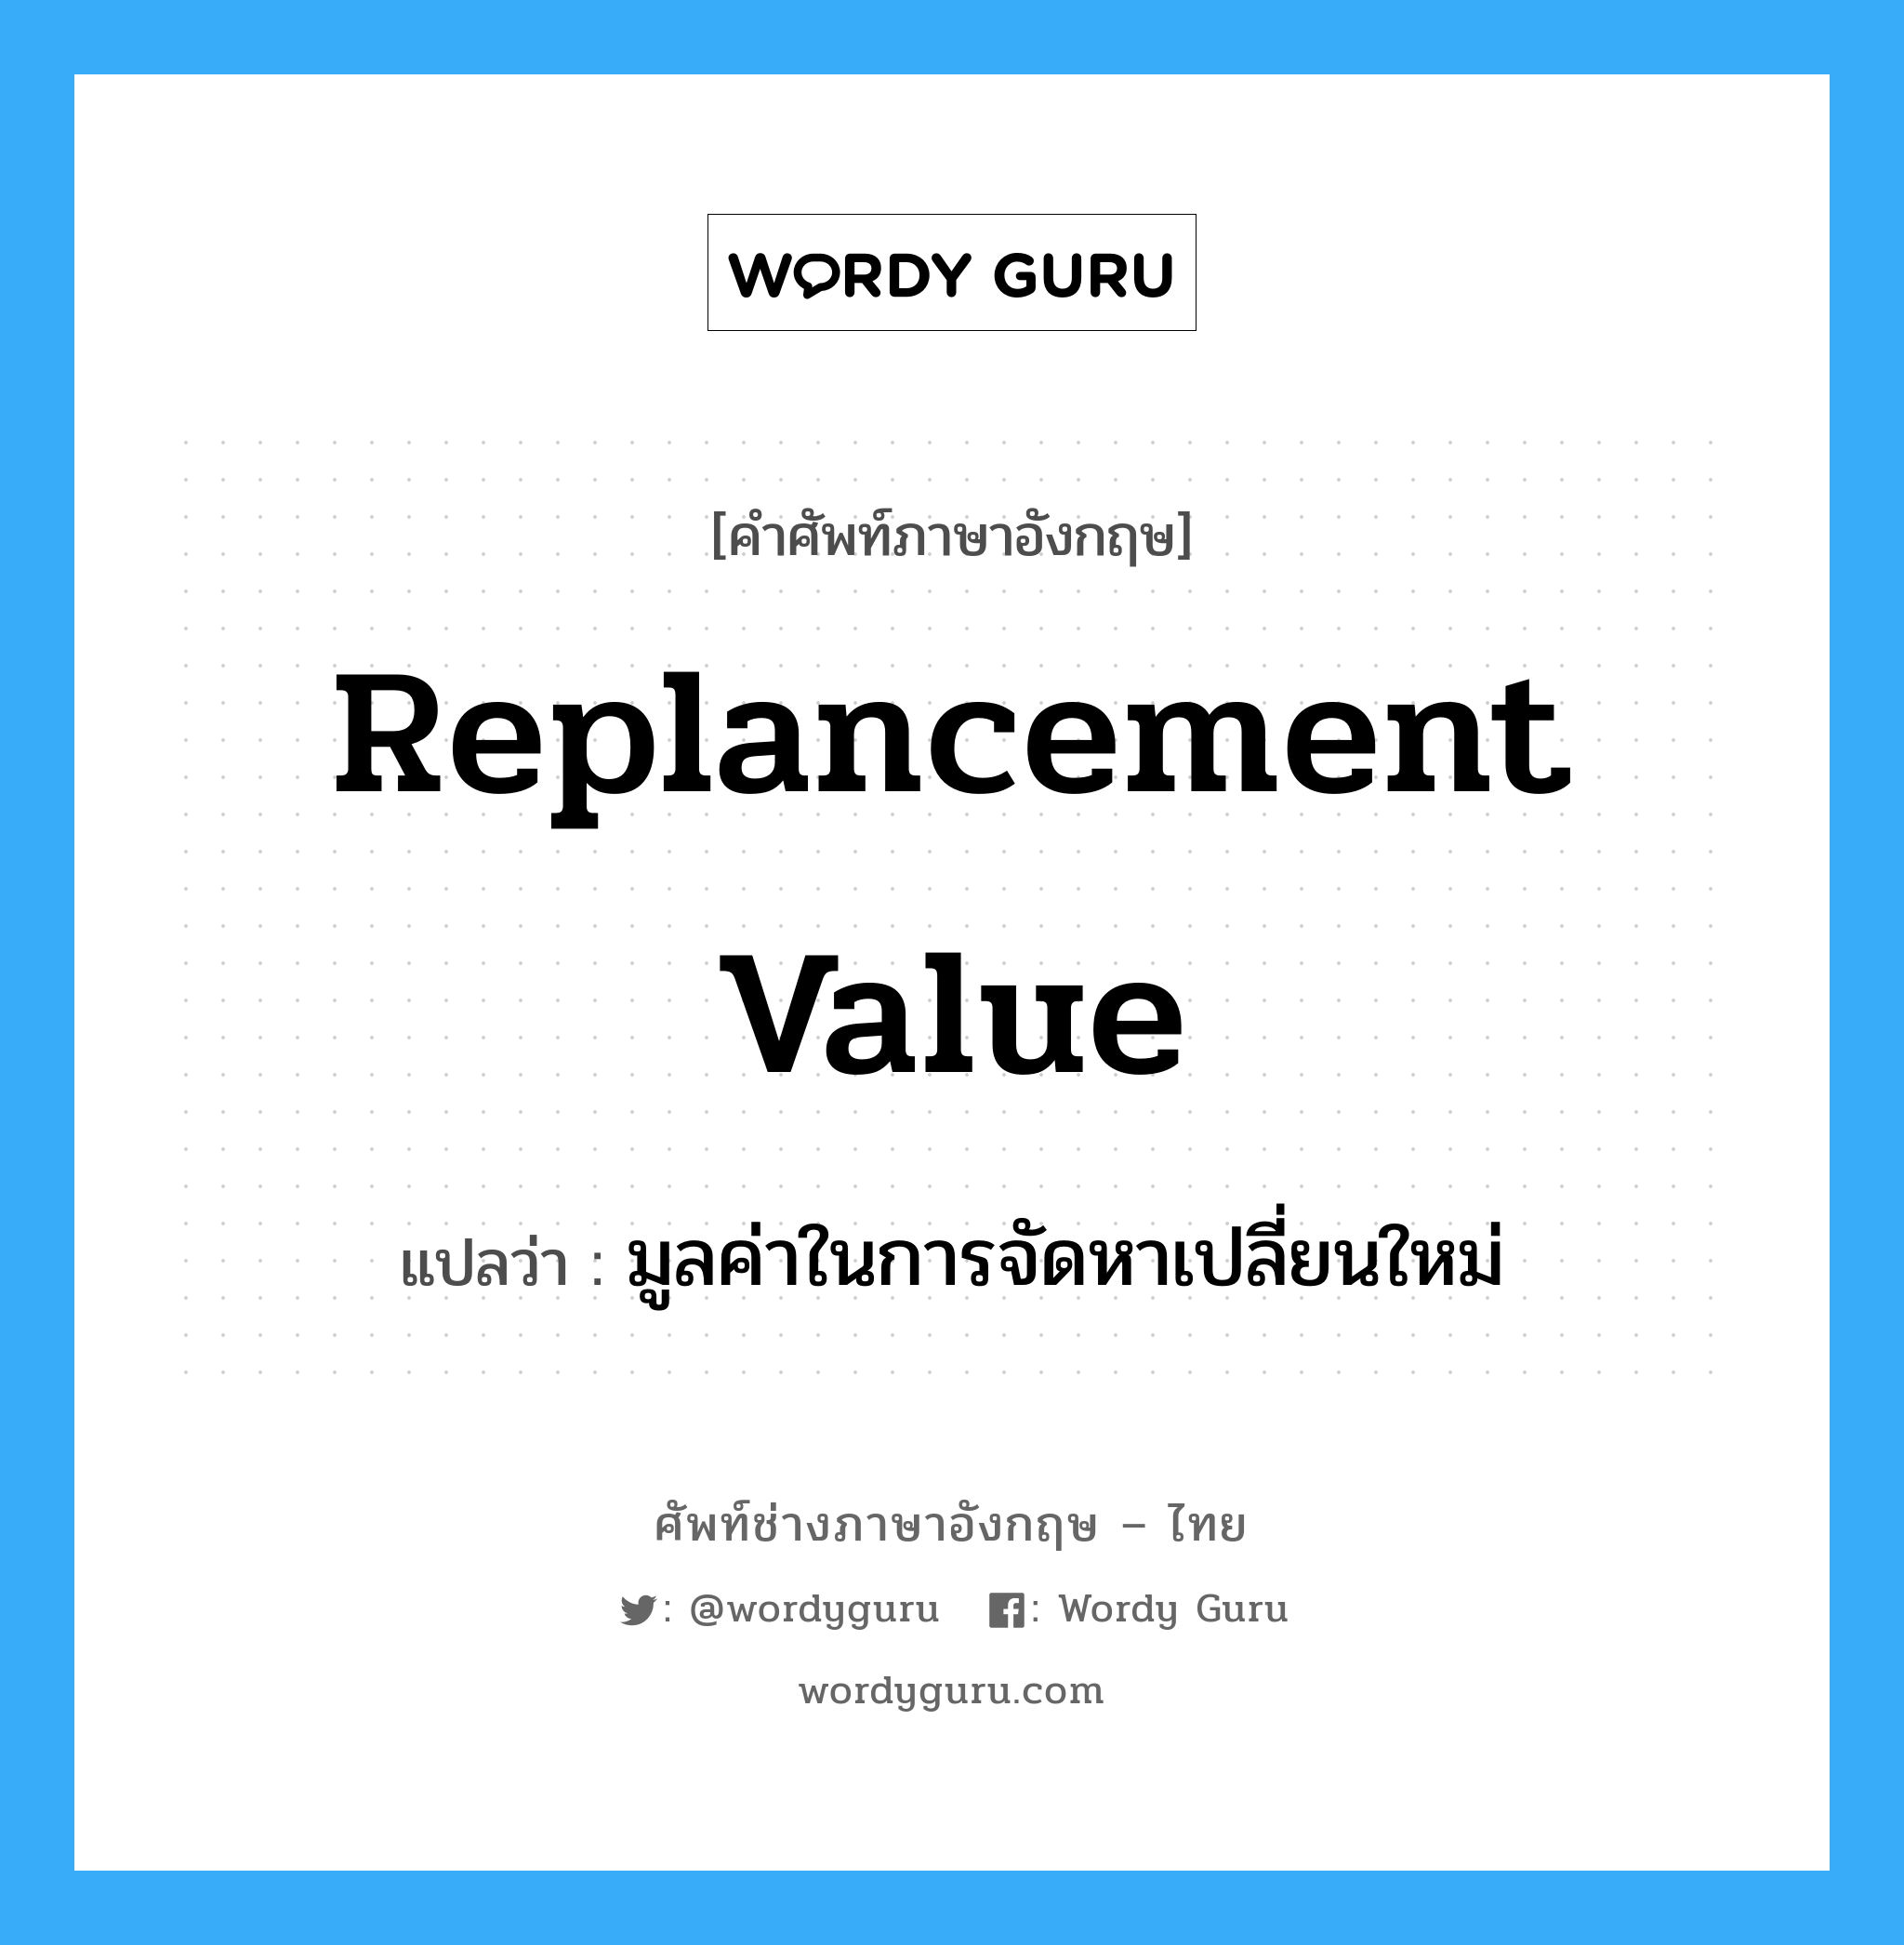 replancement value แปลว่า?, คำศัพท์ช่างภาษาอังกฤษ - ไทย replancement value คำศัพท์ภาษาอังกฤษ replancement value แปลว่า มูลค่าในการจัดหาเปลี่ยนใหม่